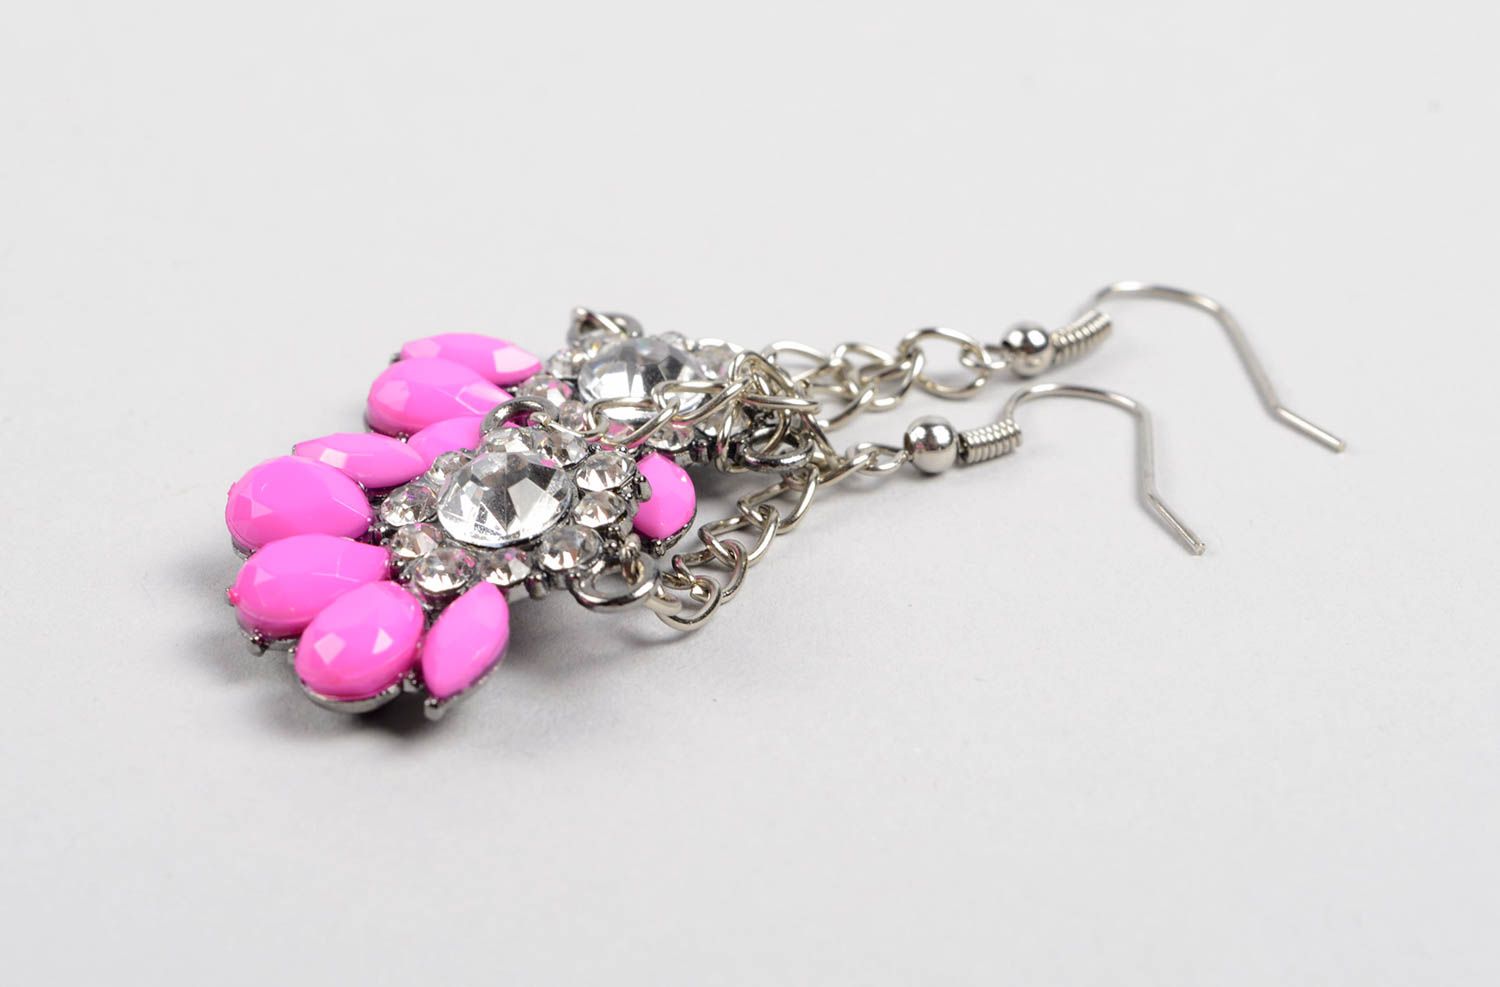 Dangling earrings handmade jewellery fashion earrings designer accessories photo 2